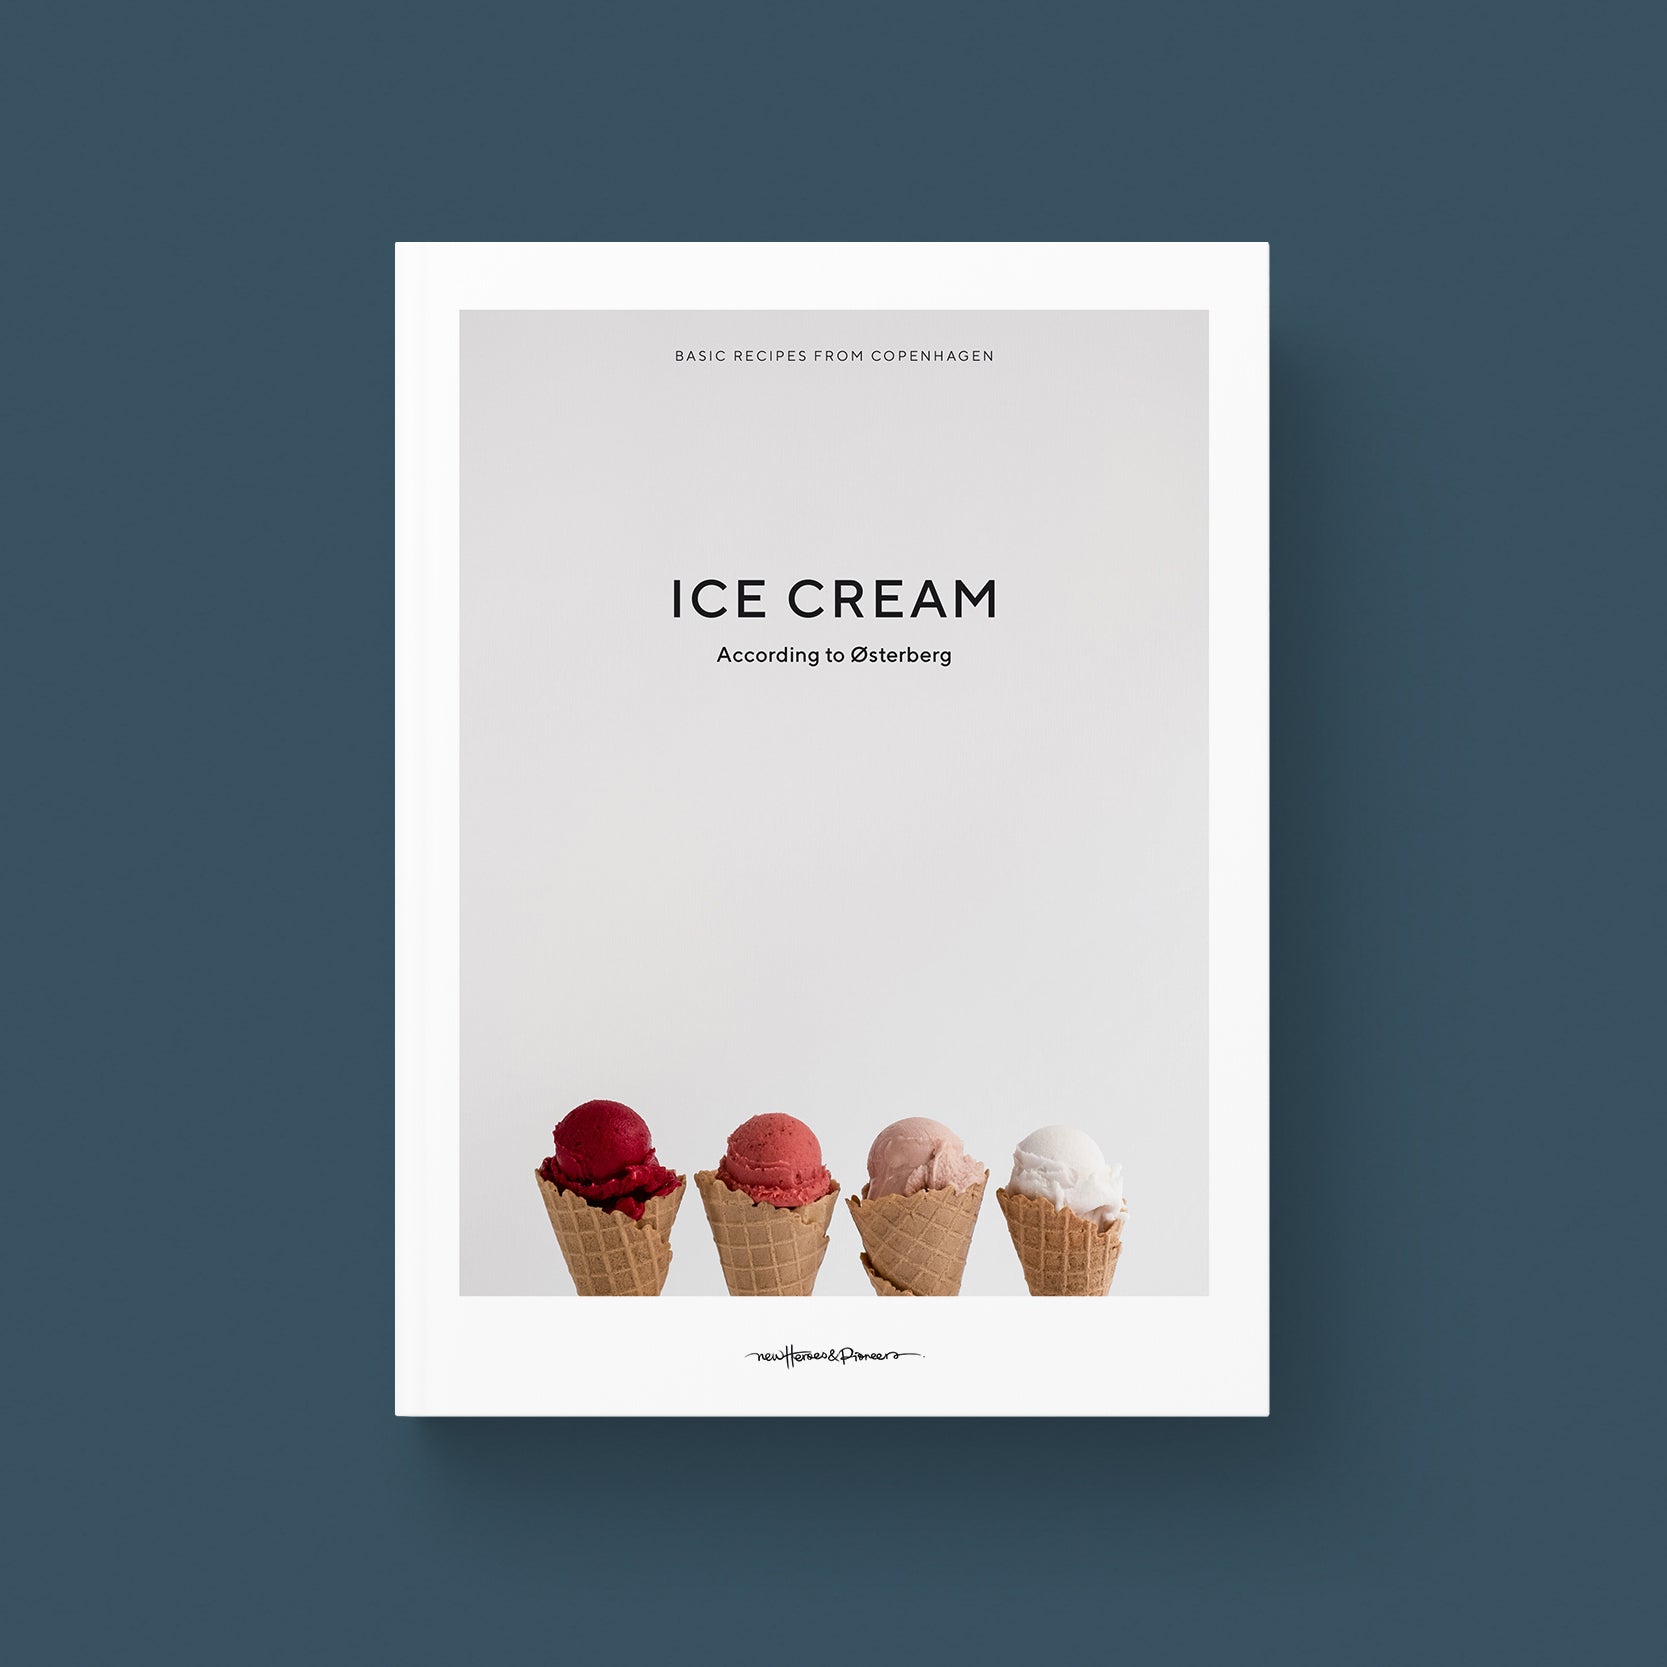 Isbog / cream book / ice cream according to østerberg – Østerberg Cph